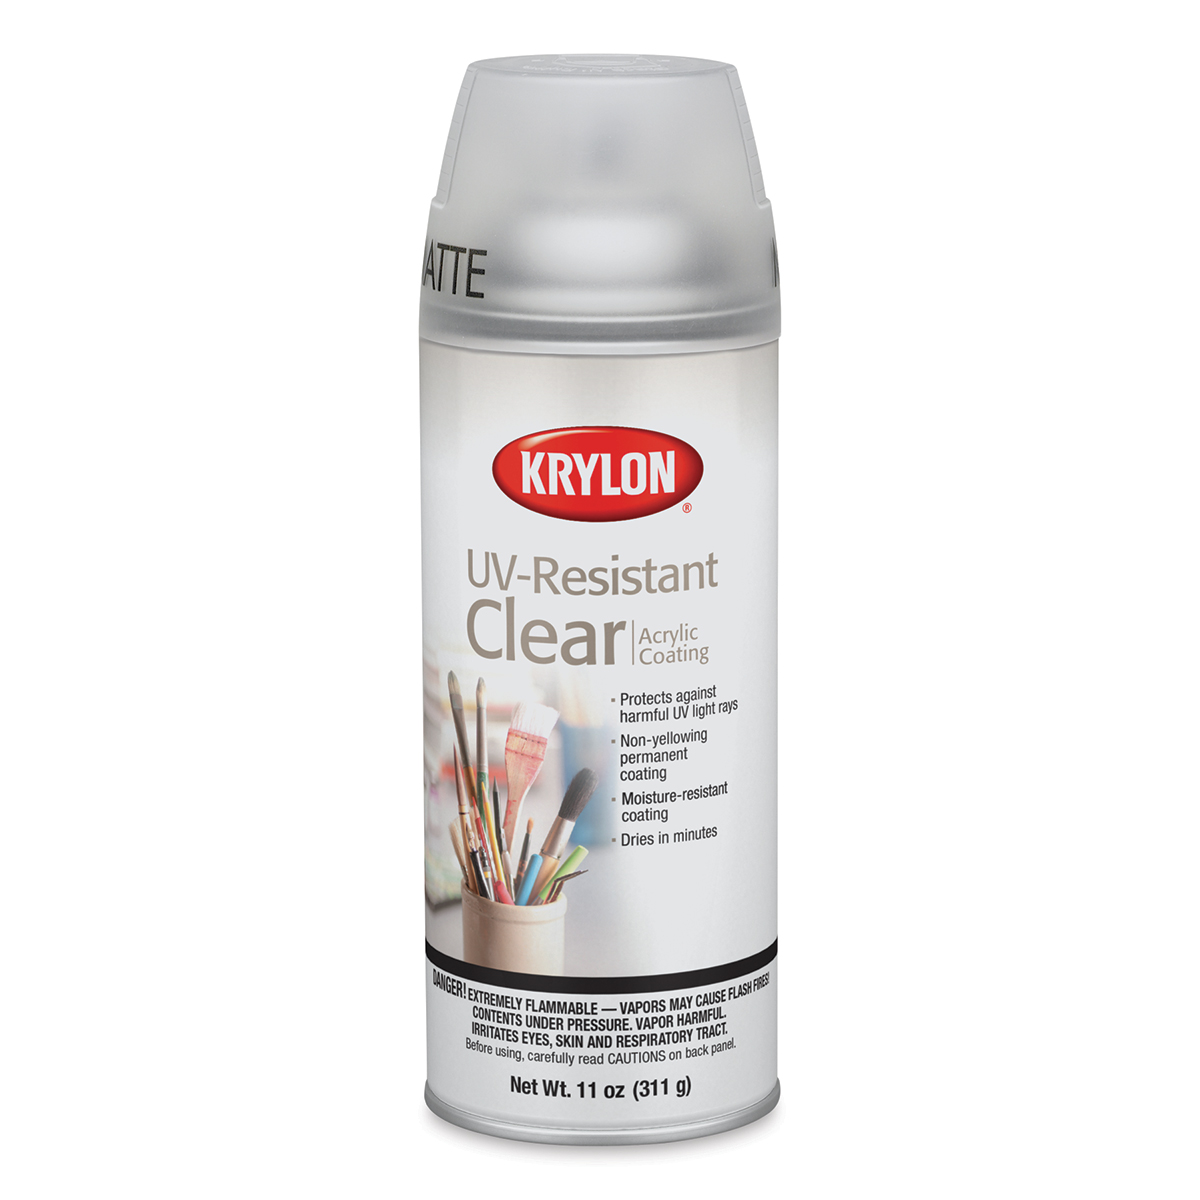 Gloss Krylon Clear Polyurethane Spray